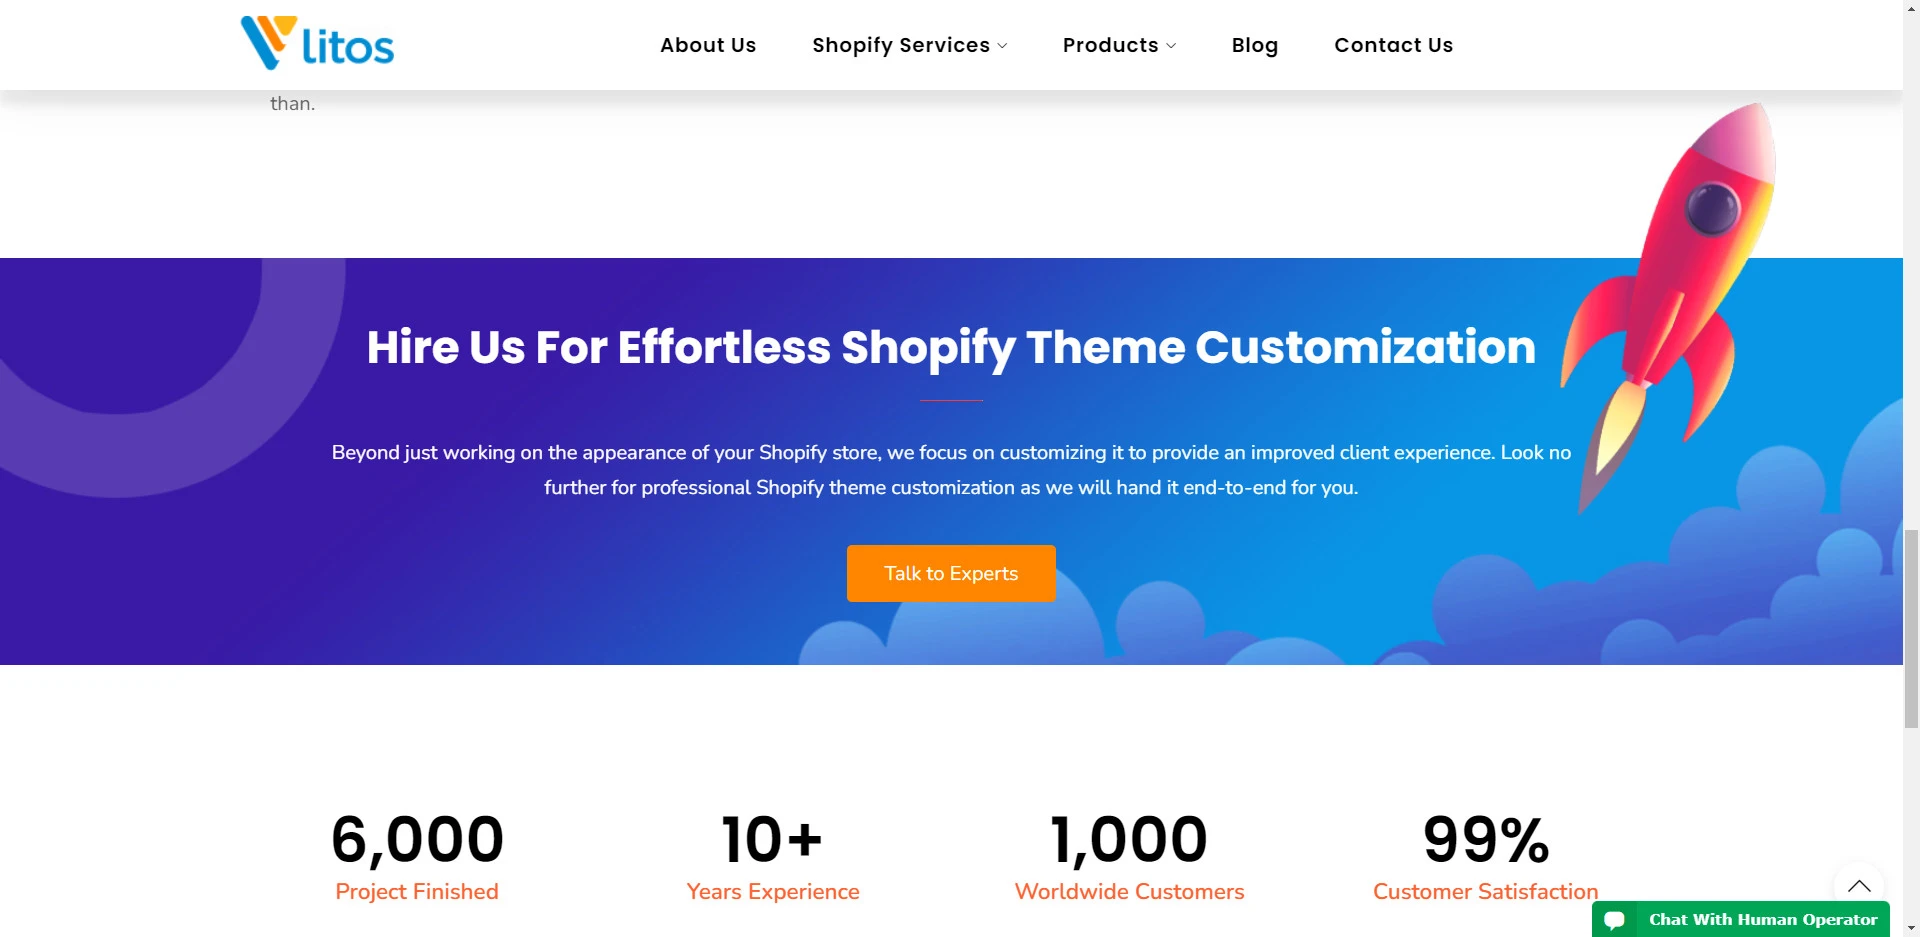 why Litos for Shopify theme development provider